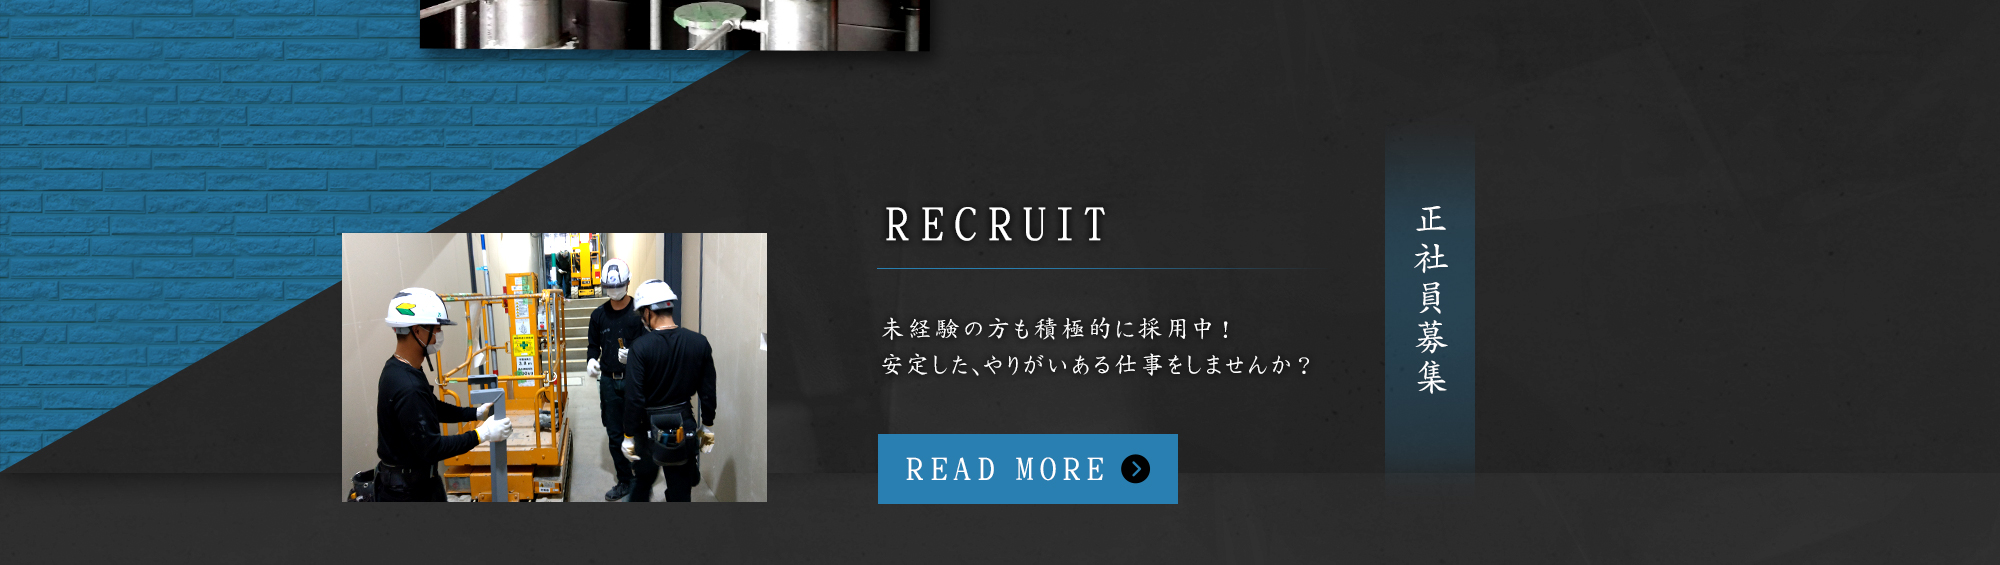 recruit_banner_01